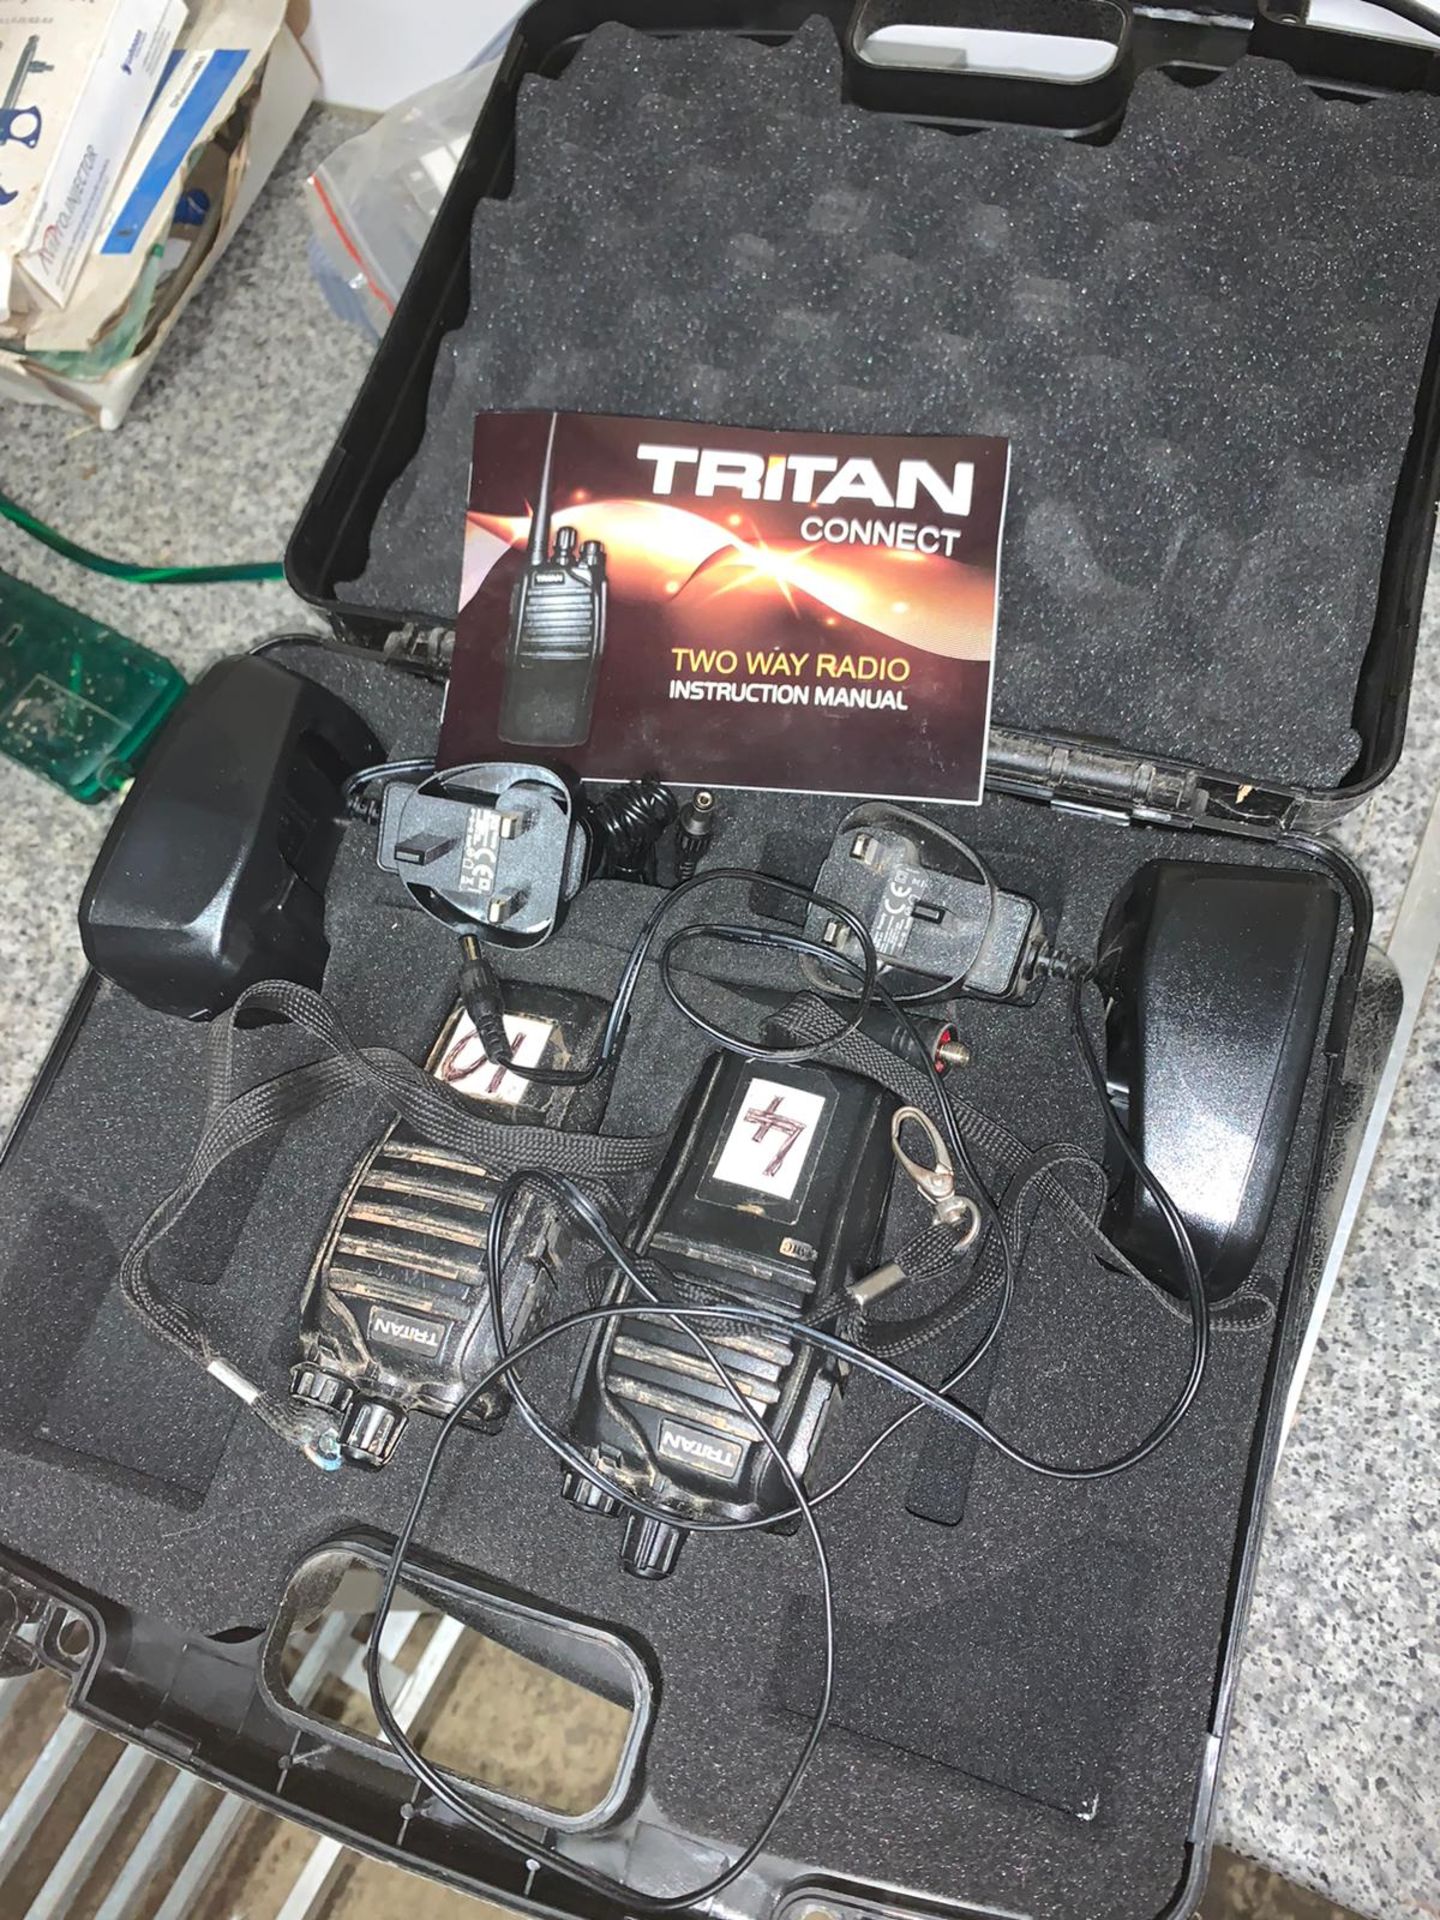 Tritan Connect UHF 2 Way Radio Set - Image 2 of 2